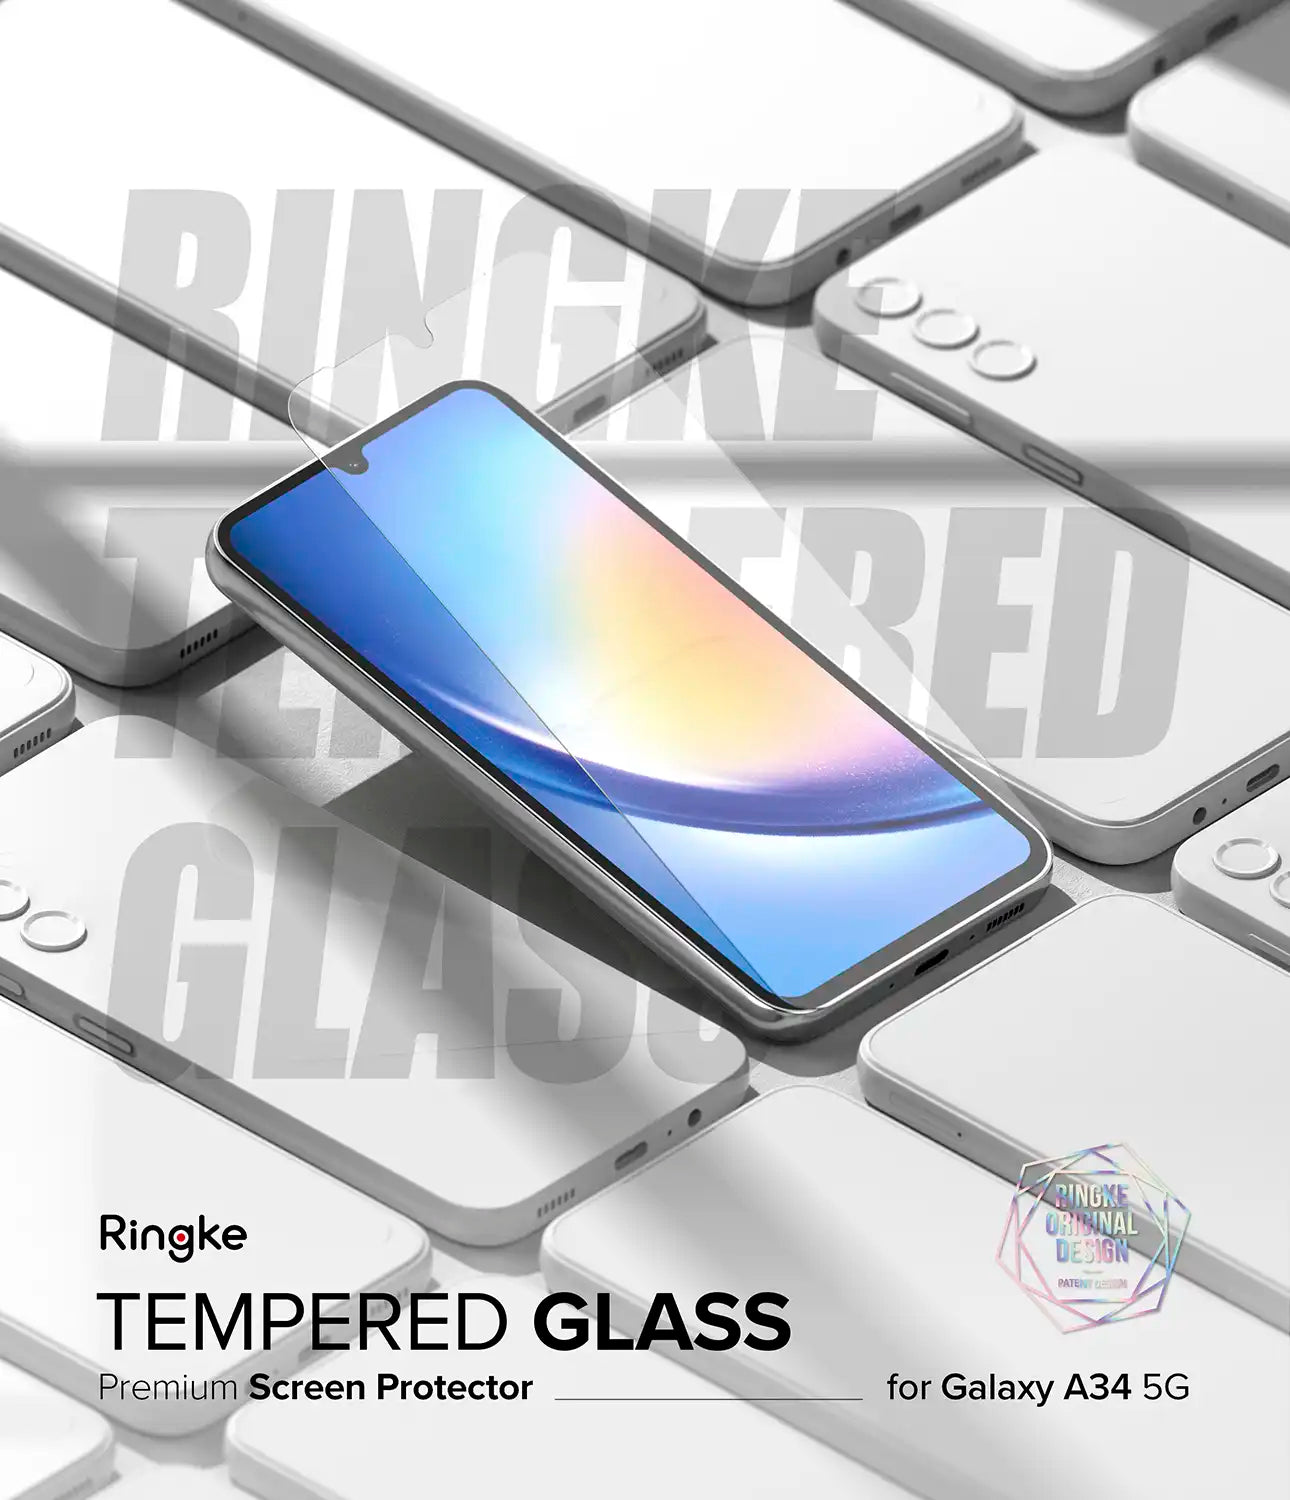 Vidrio Templado Ringke Samsung Galaxy A34 [2 pack]